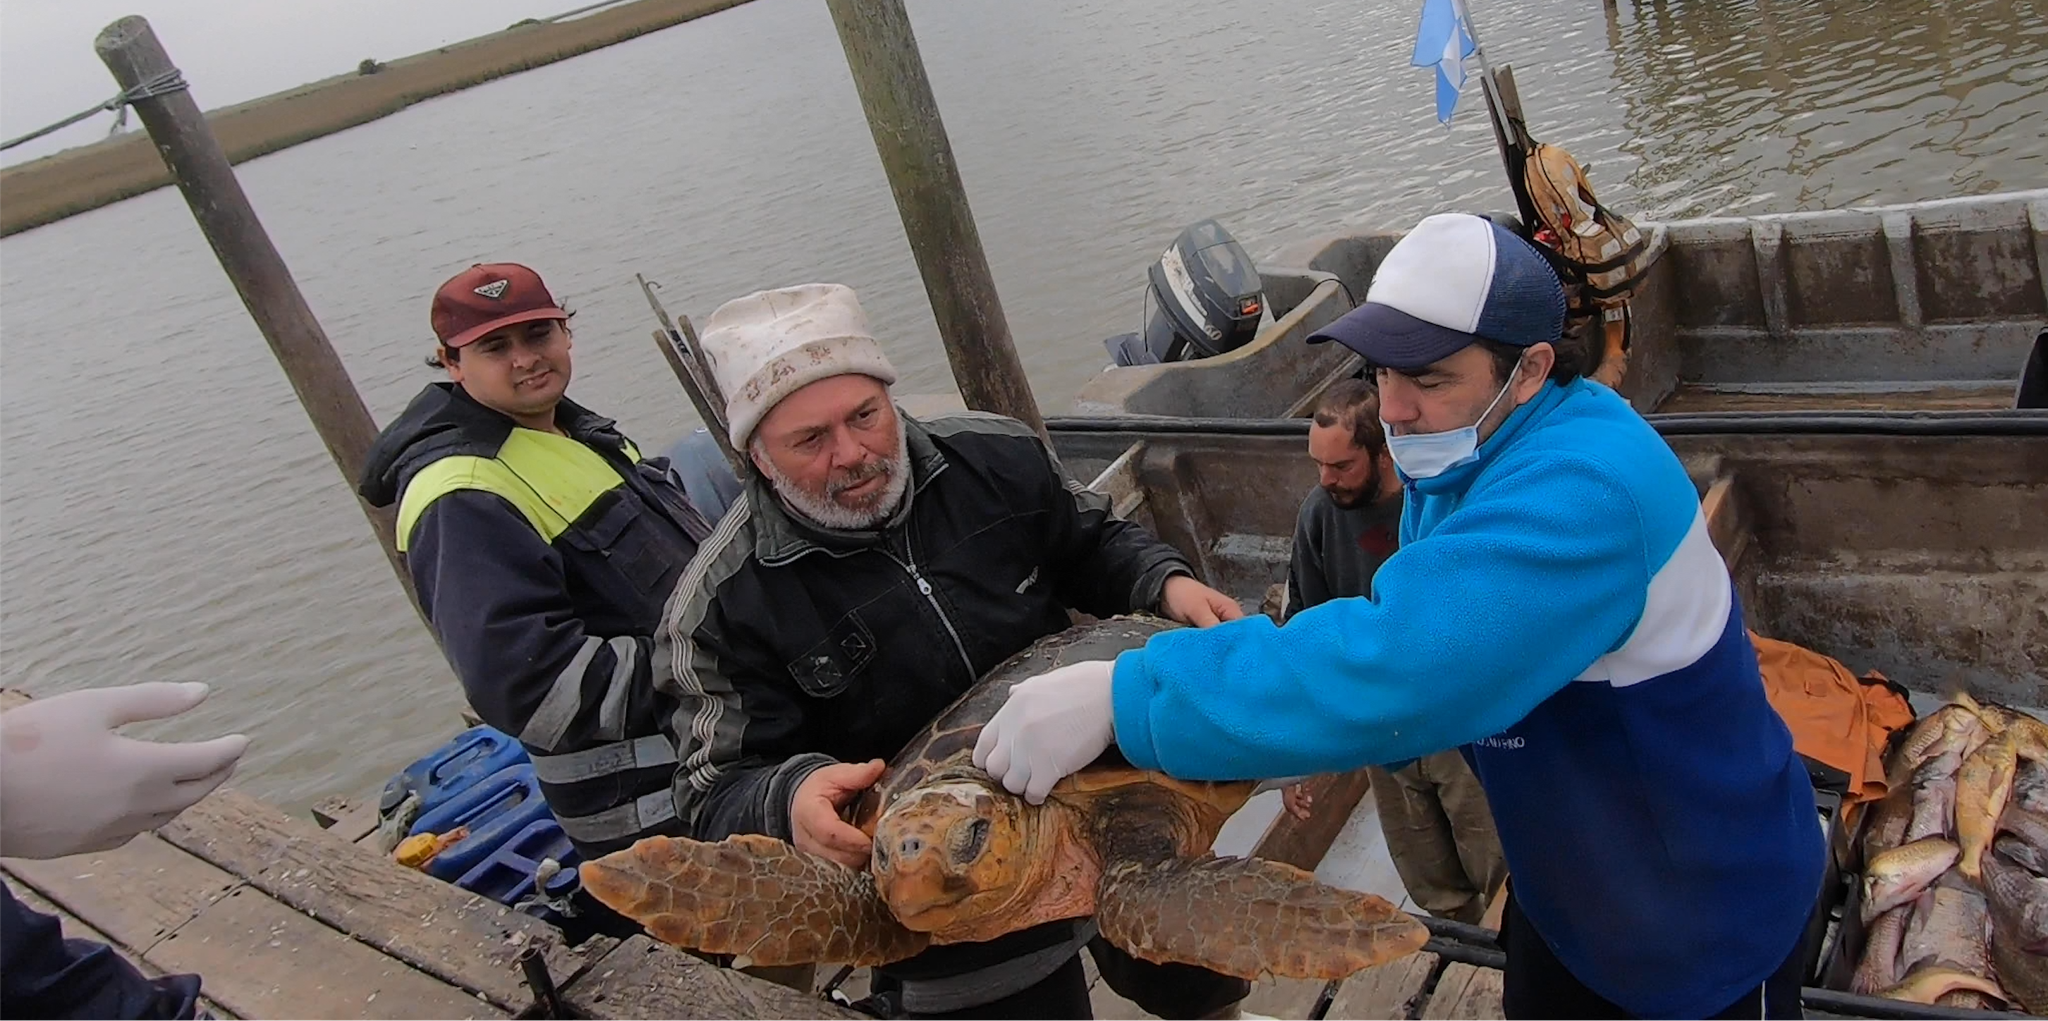 Una tortuga cabezona de 50 kilos regresó al mar después de quedar atrapada en una red de pesca artesanal